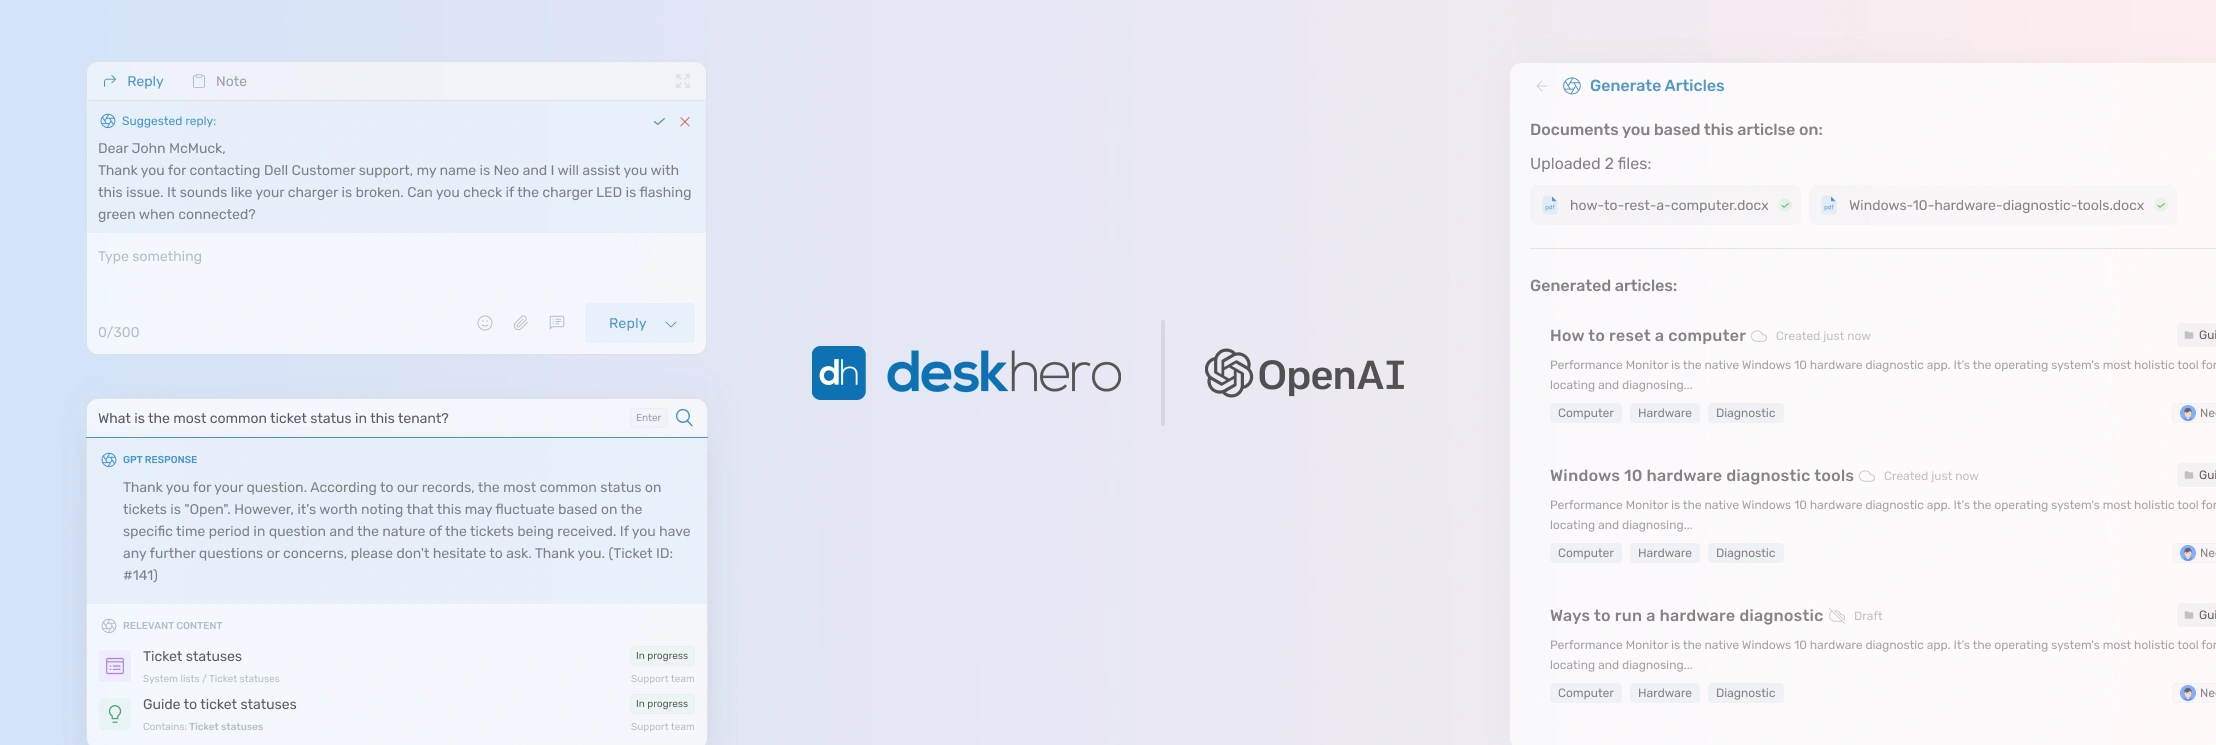 Streamlining Customer Support with Deskhero's AI Capabilities